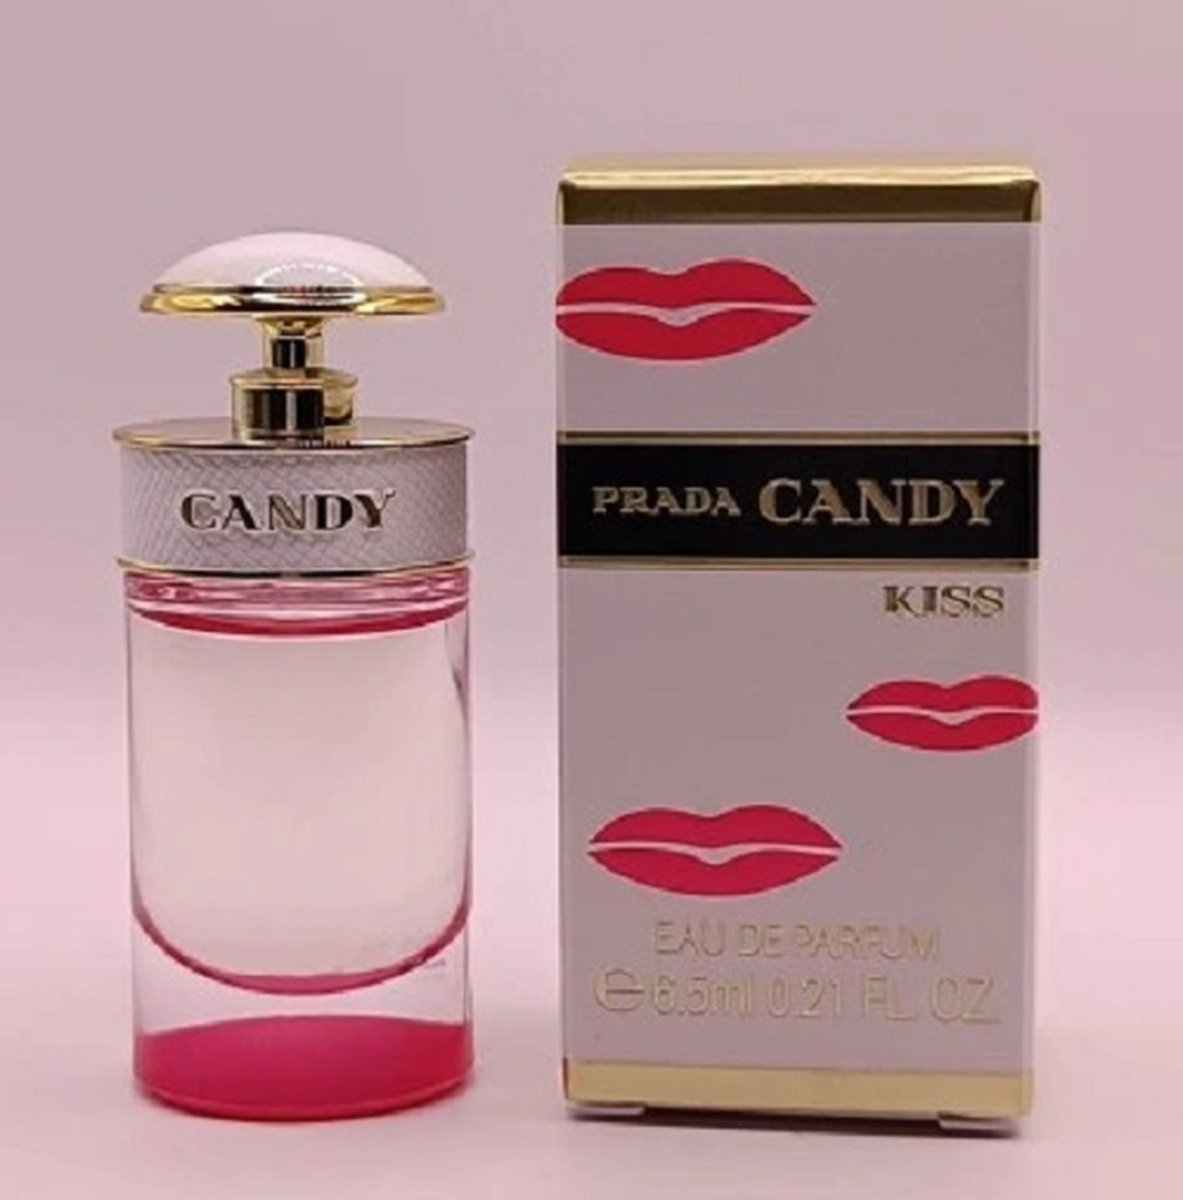 Prada Candy Kiss Eau De Parfum 6.5 ml